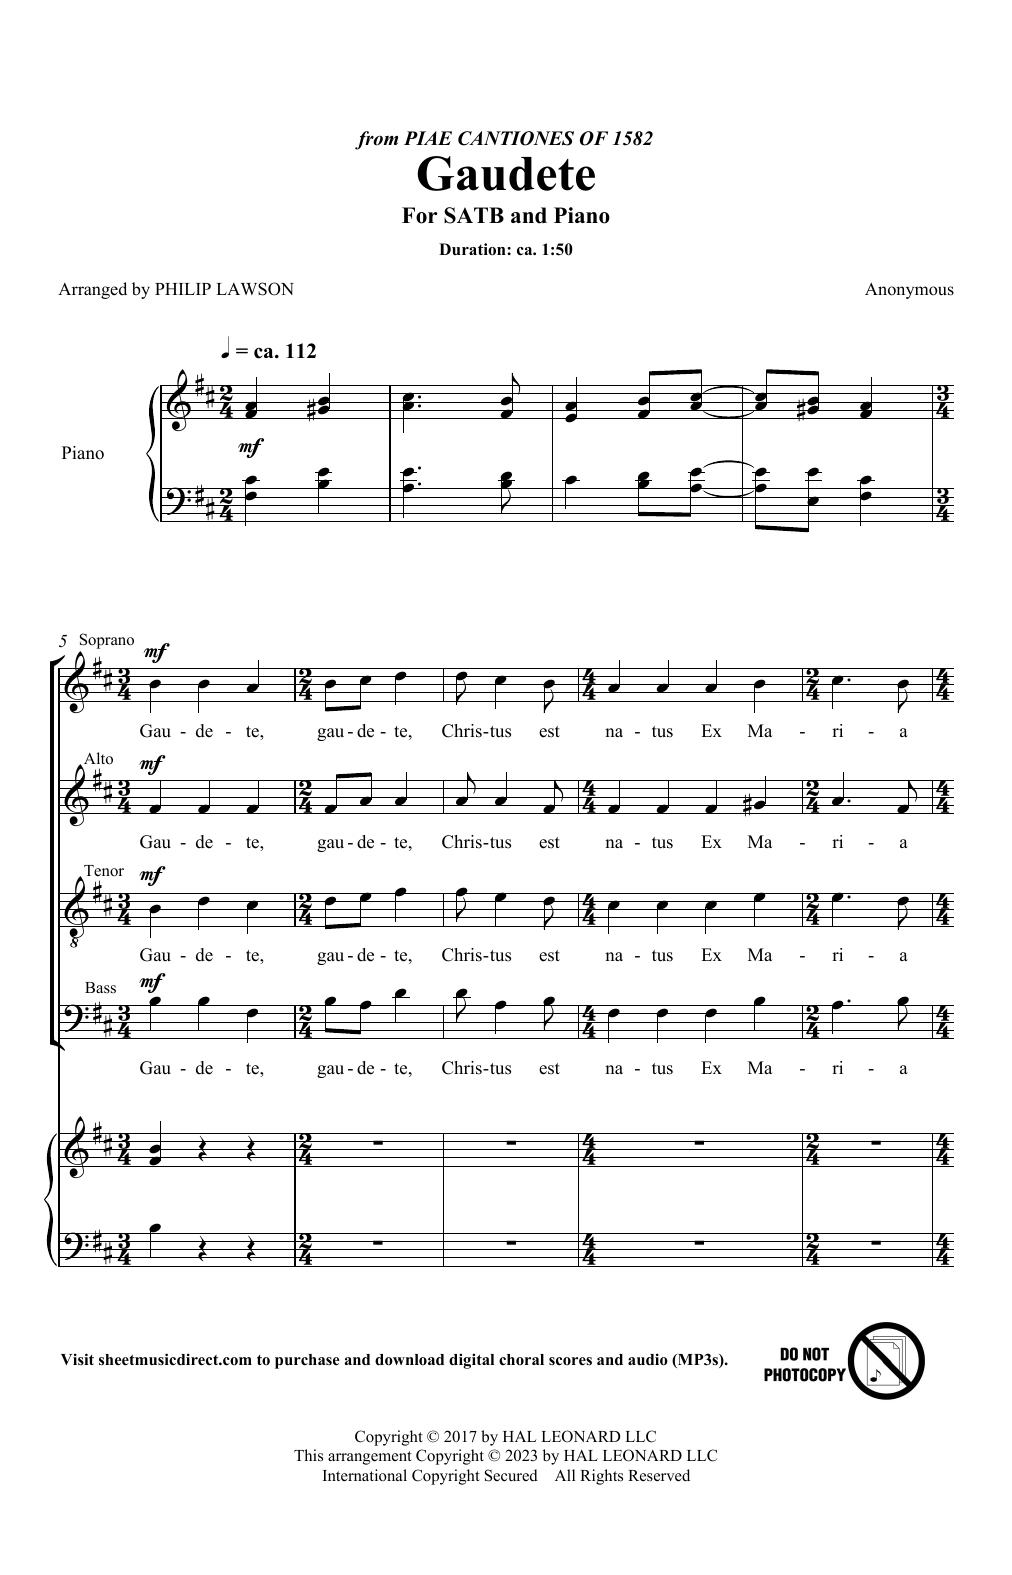 Traditional Carol Gaudete (arr. Philip Lawson) Sheet Music Notes & Chords for SATB Choir - Download or Print PDF